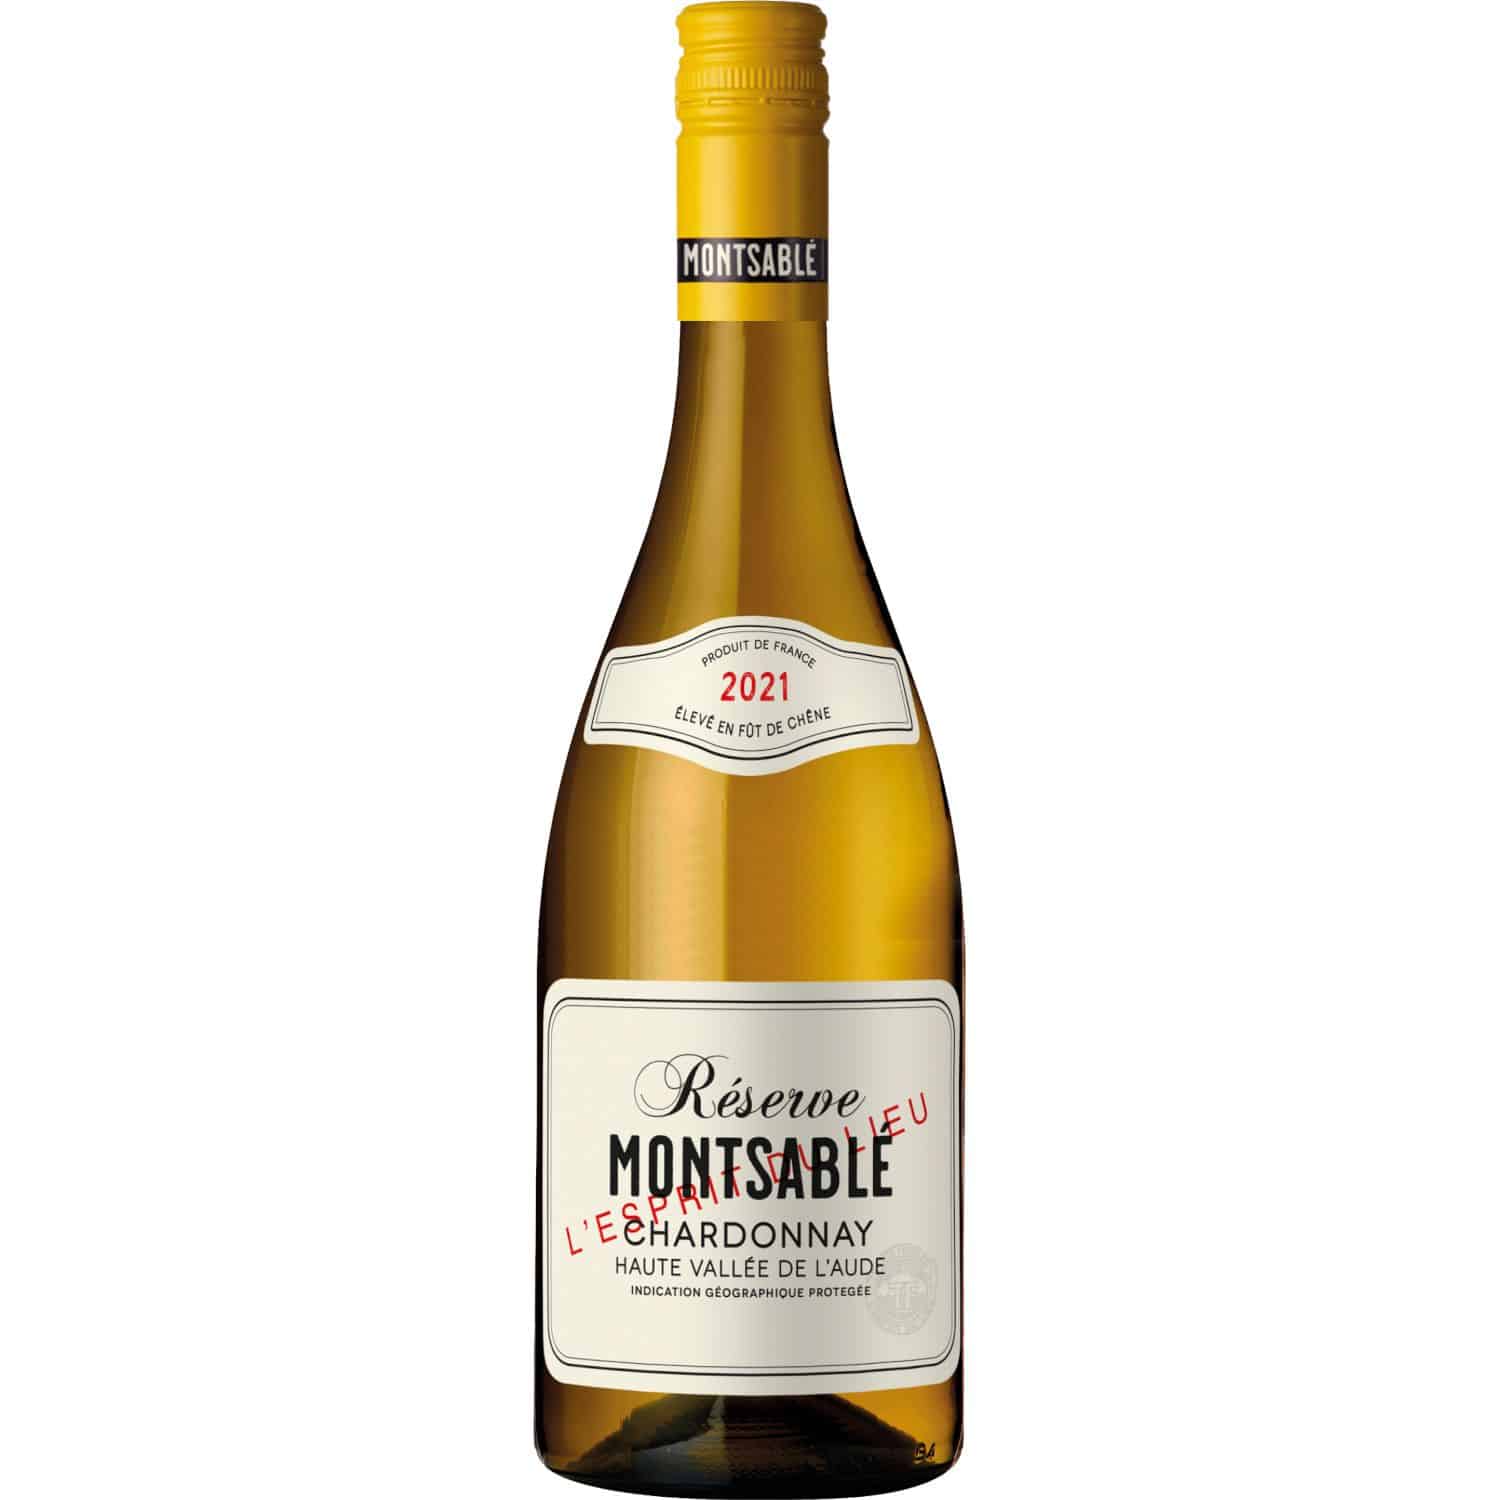 Montsable Reserve Chardonnay 2021